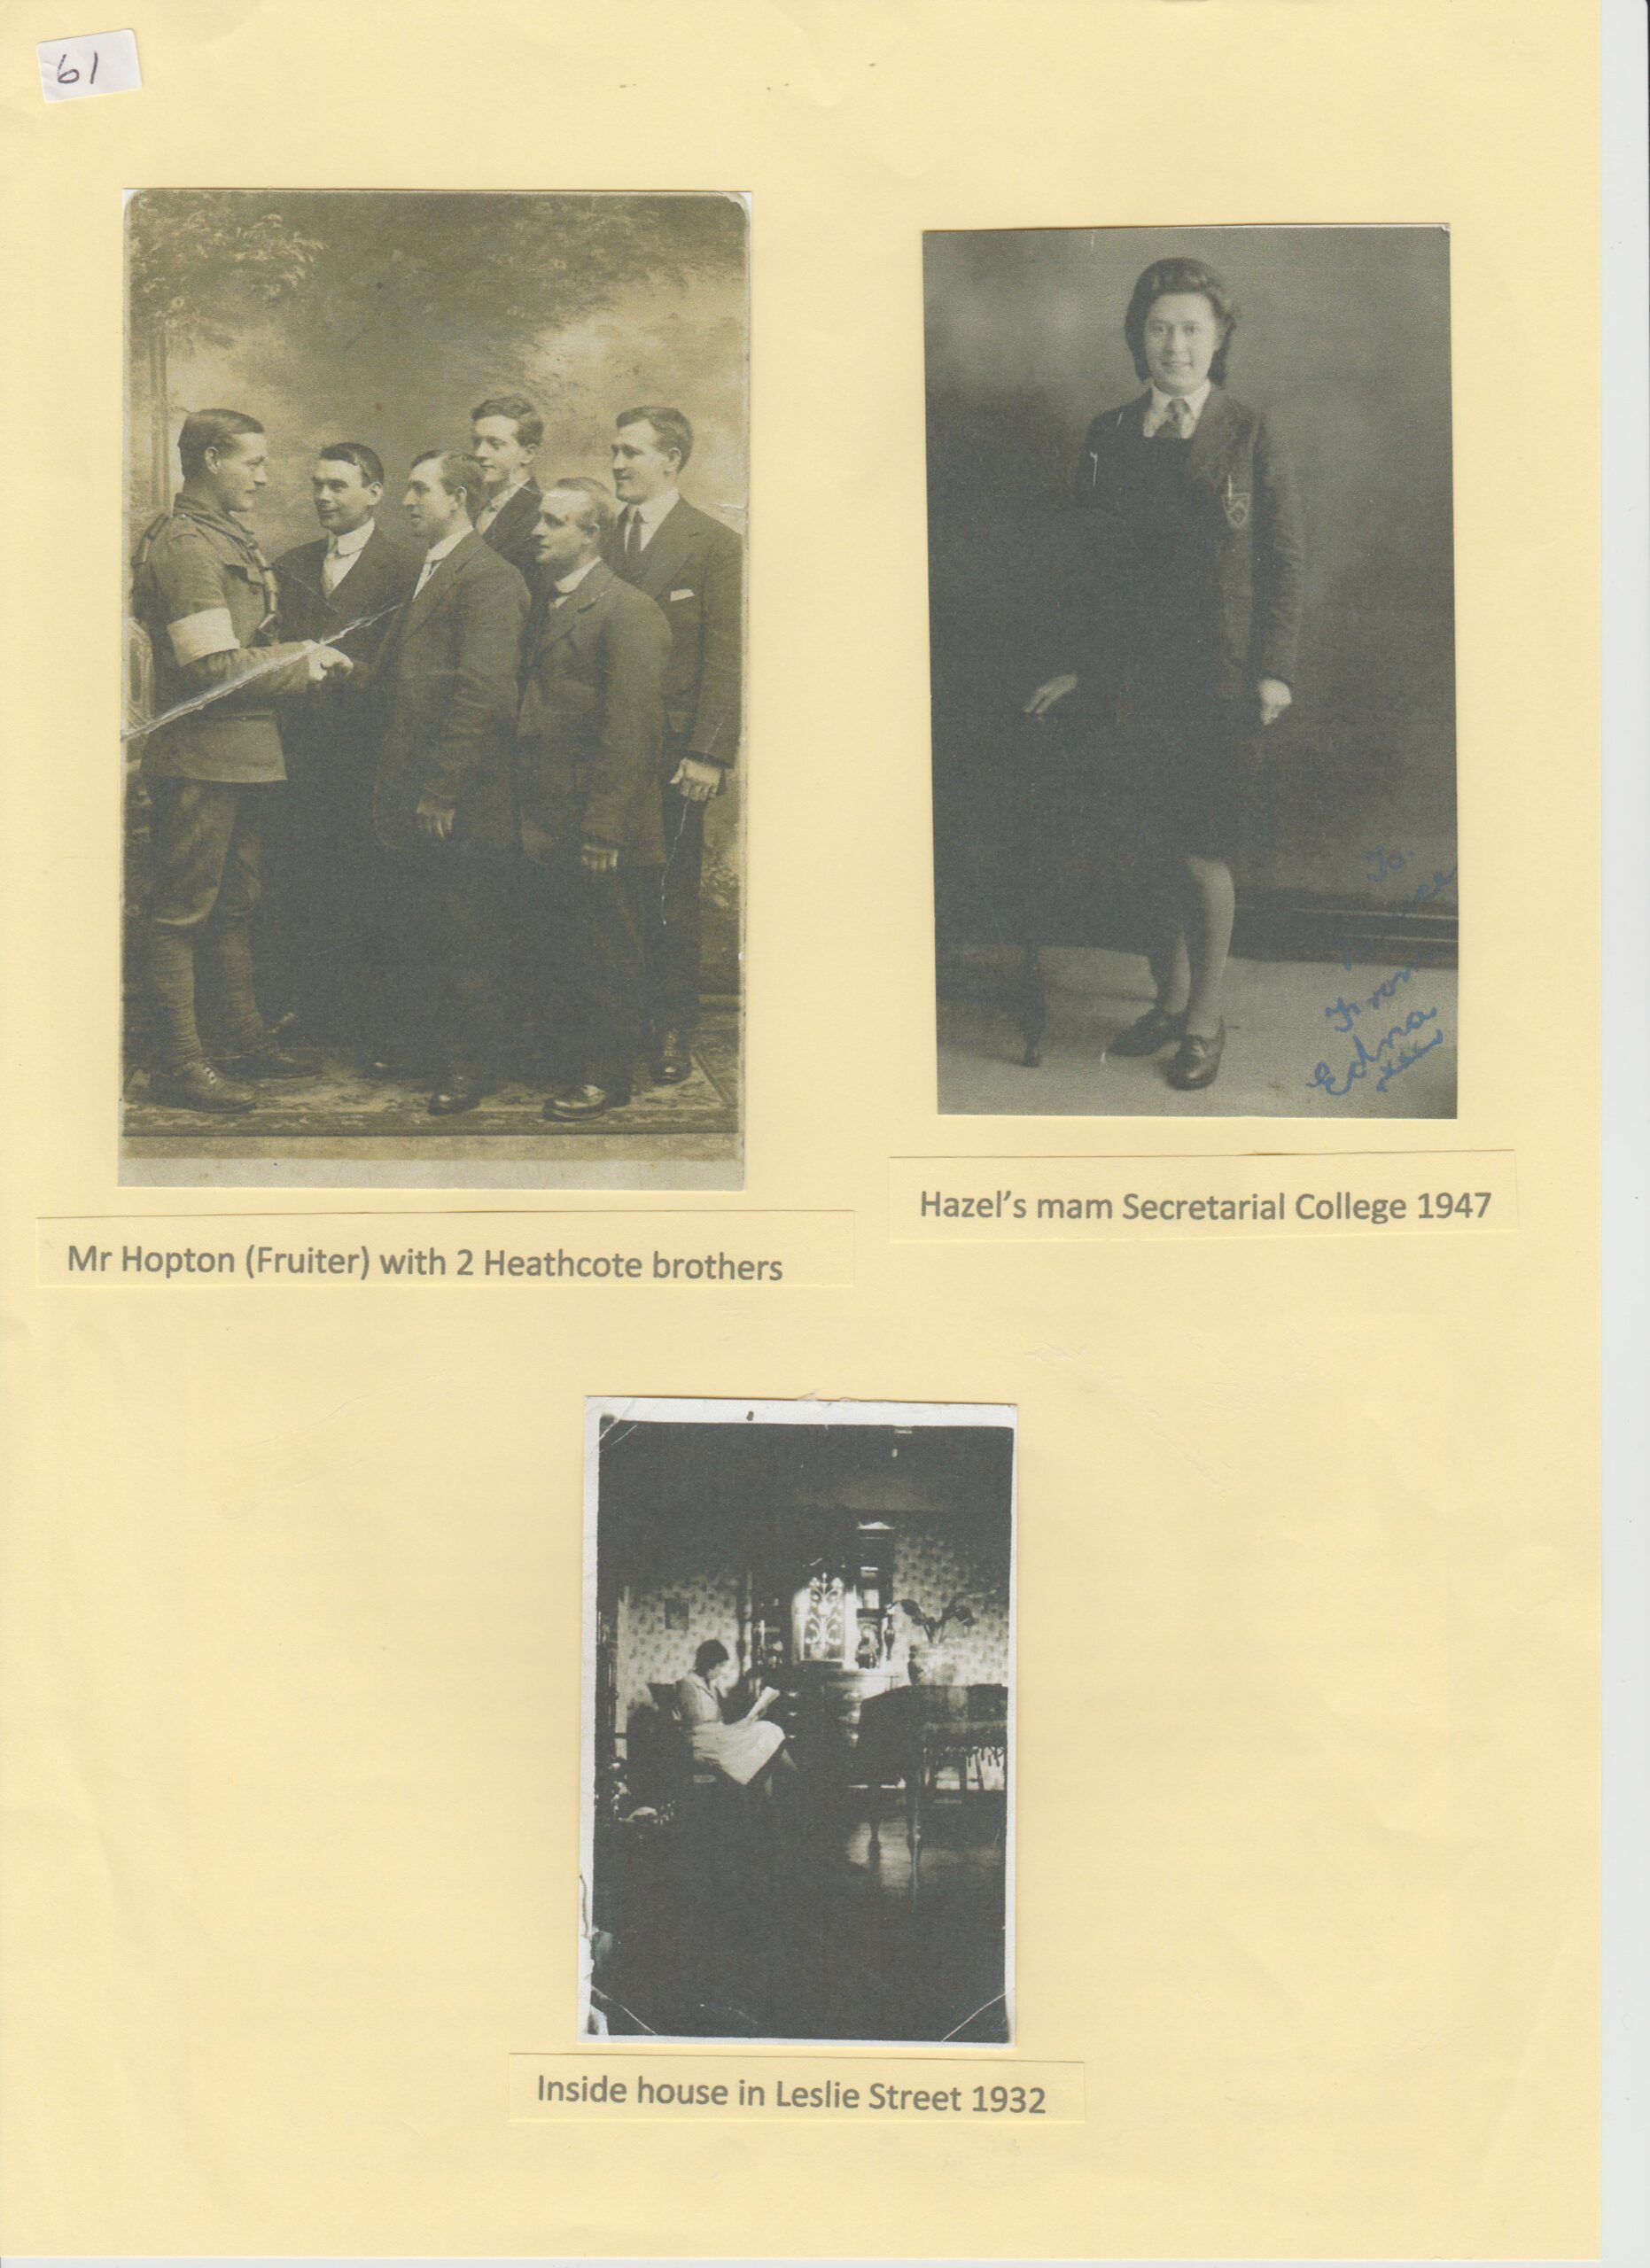 Mr Hopton (fruiter) with 2 Heathcote brothers, Hazel McCleans mam - secretarial College 1947, Inside house Leslie Street 1932